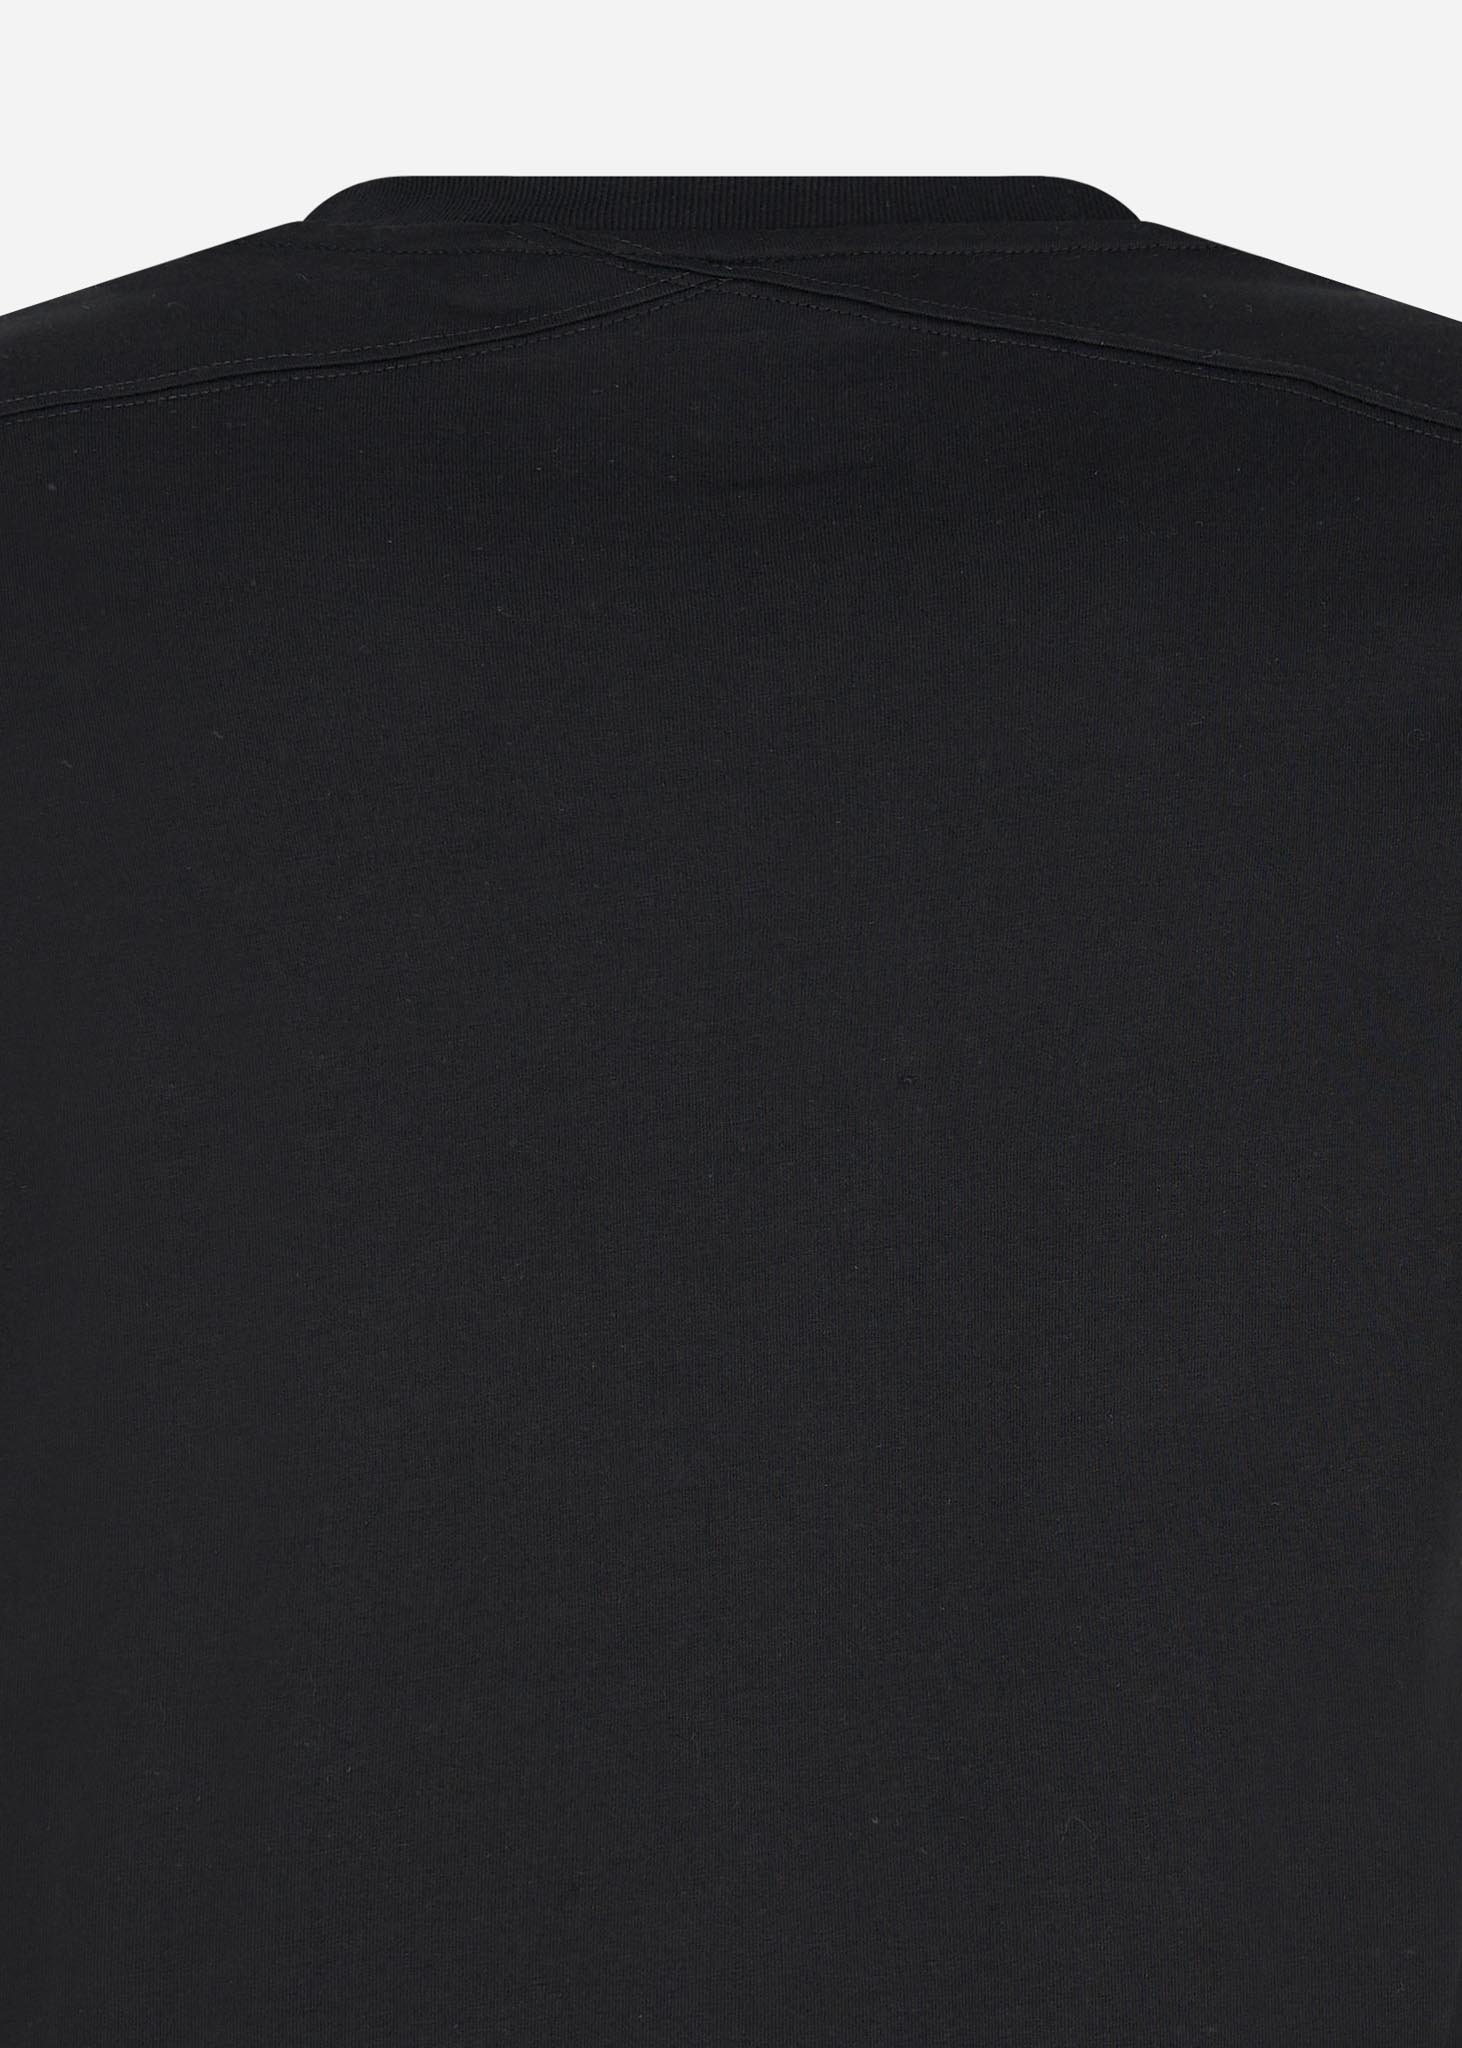 MA.Strum T-shirts  SS icon tee - jet black 